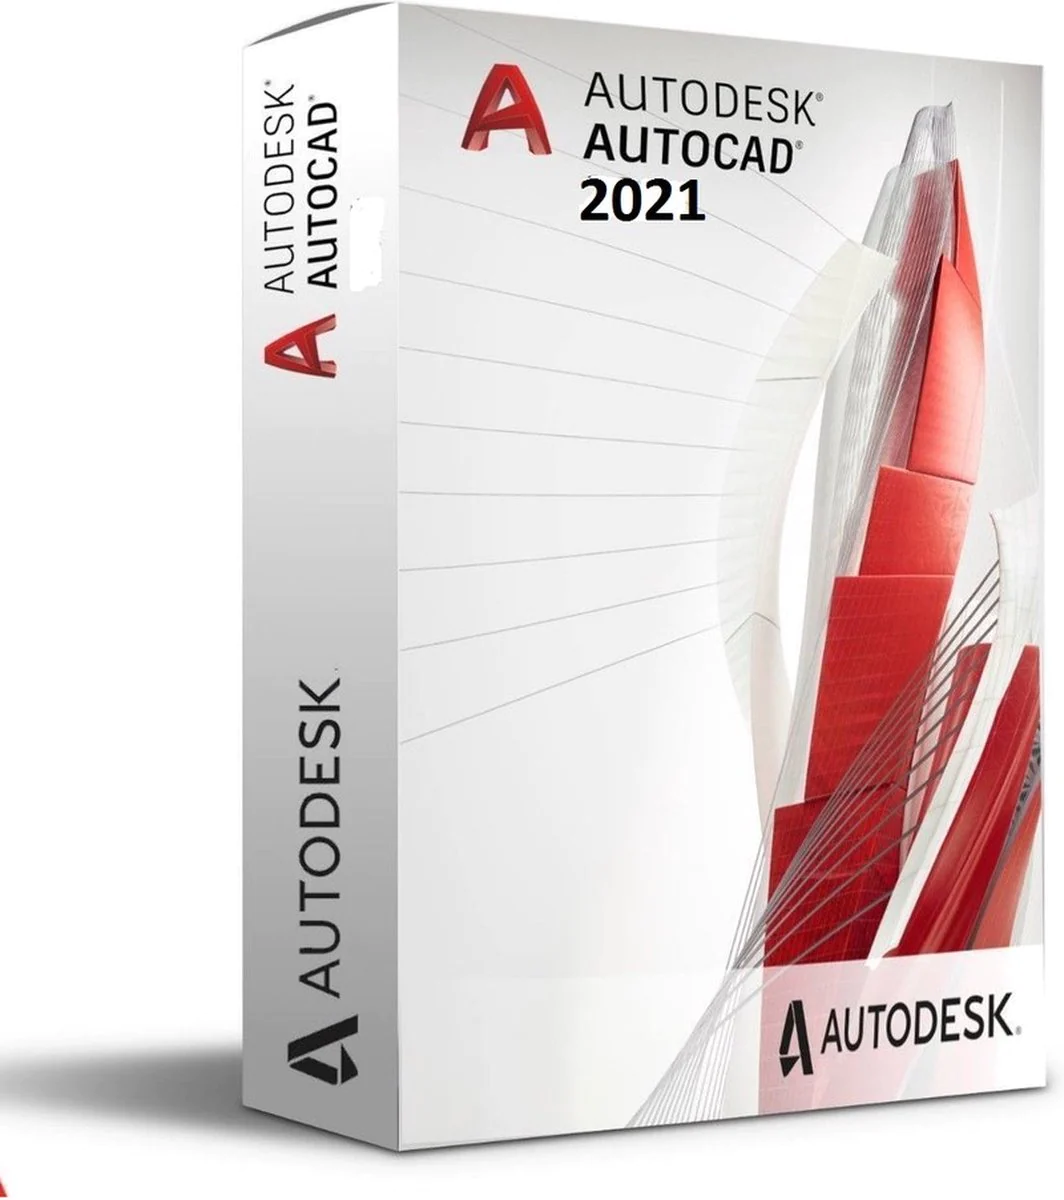 Download Autodesk AUTOCAD 2021 Full Version